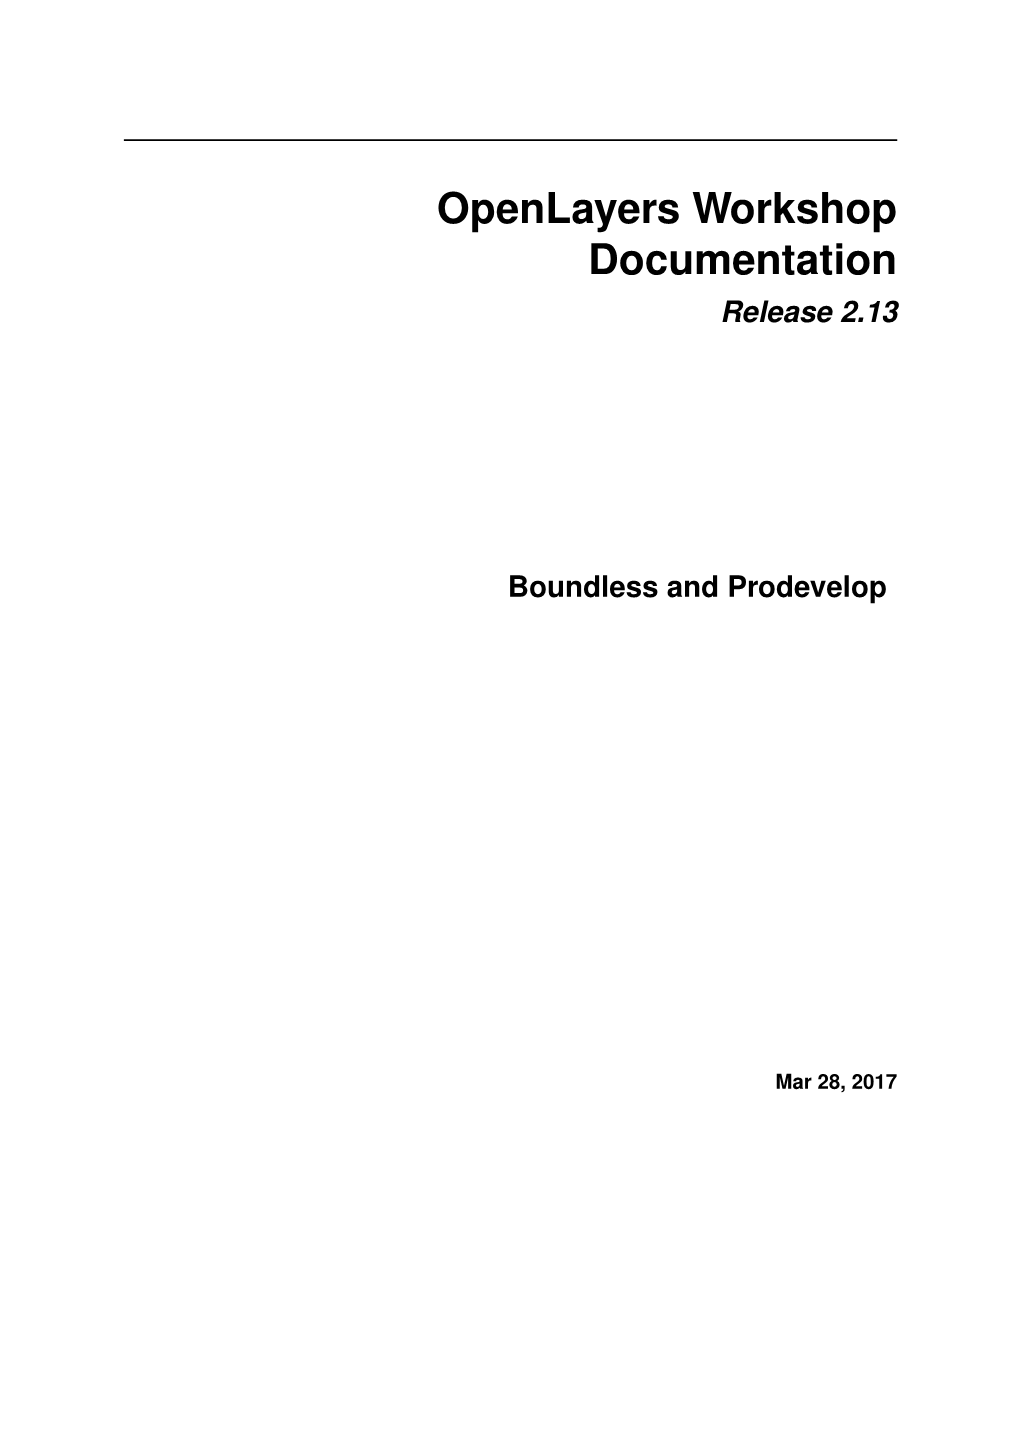 Openlayers Workshop Documentation Release 2.13